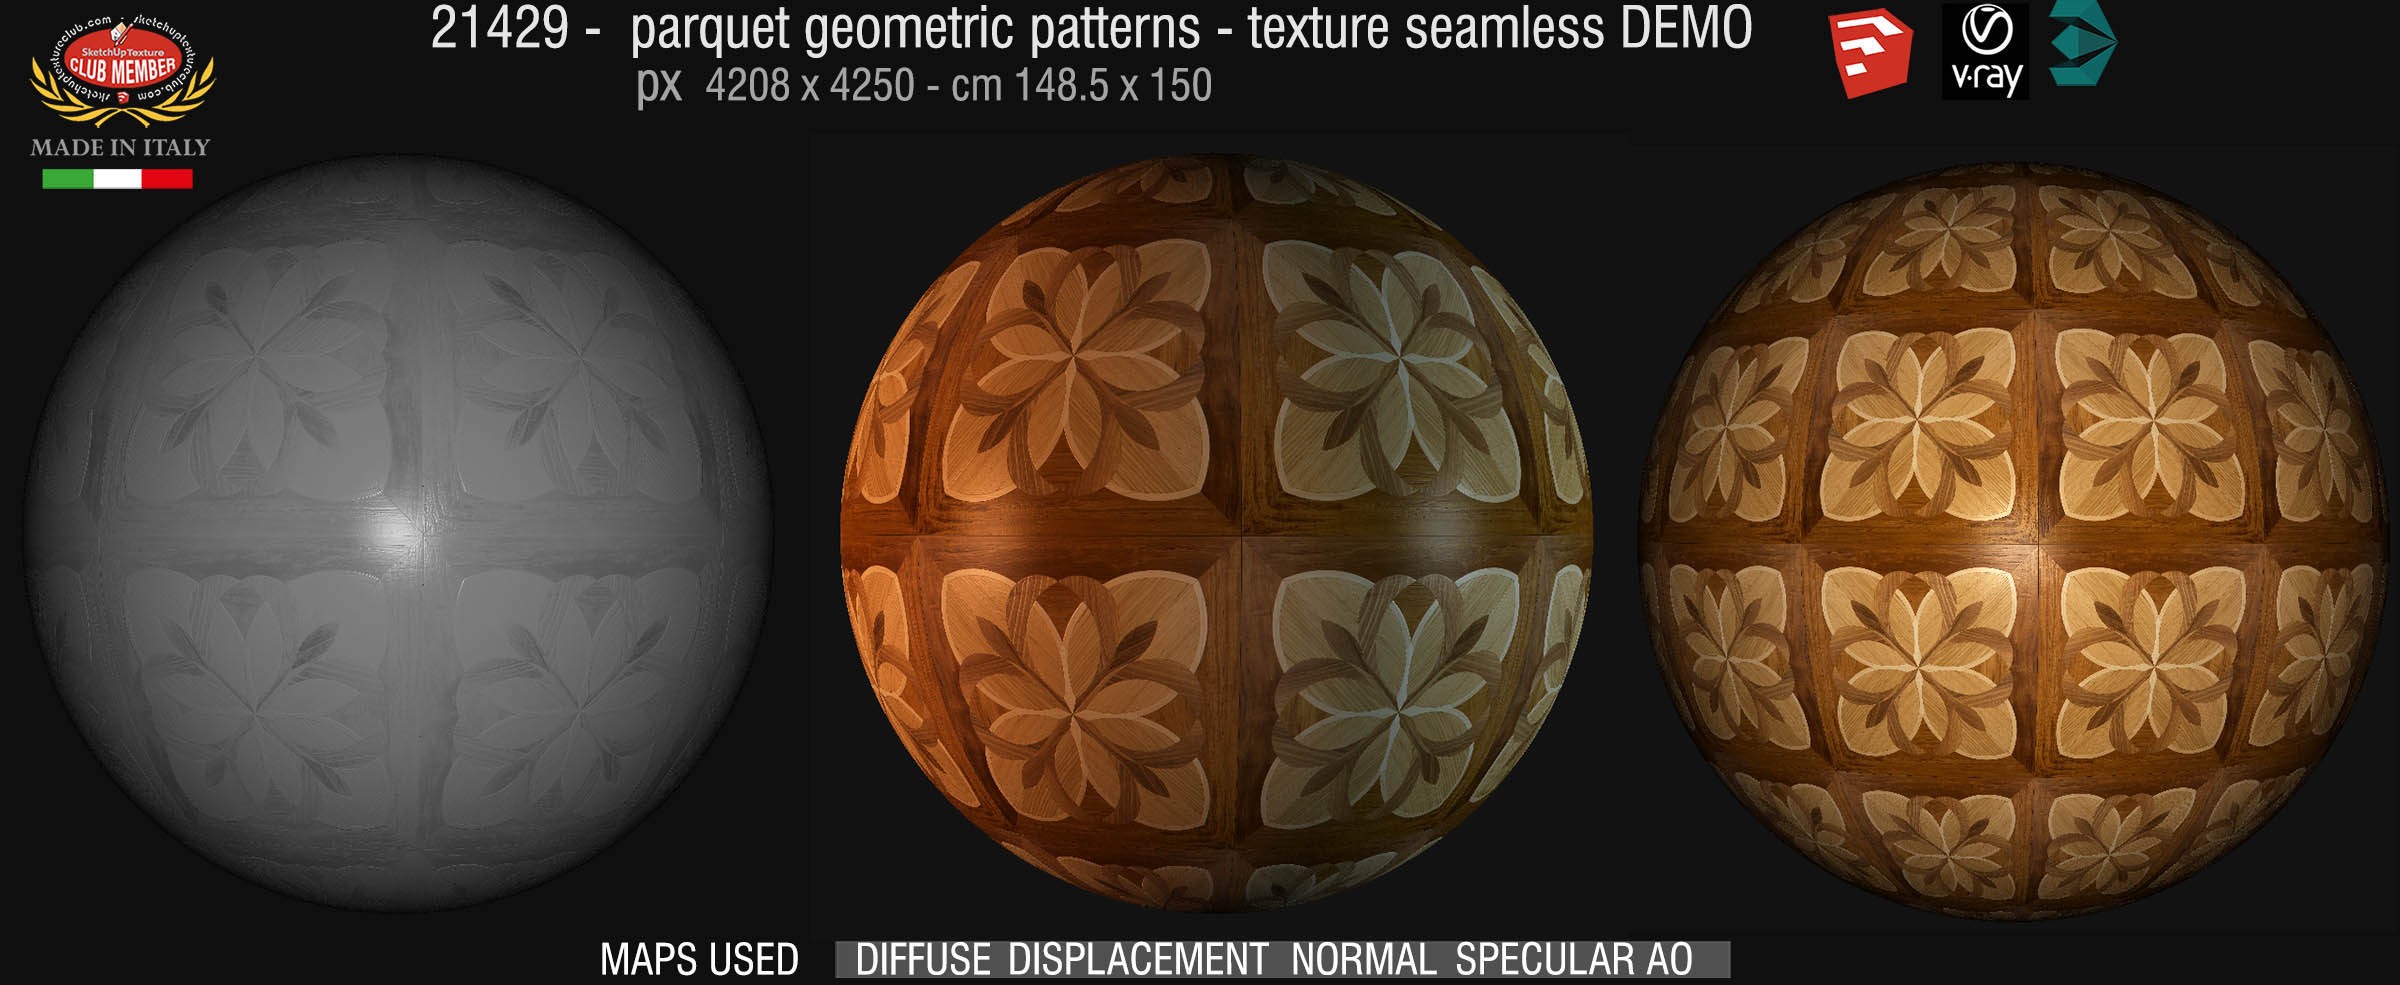 21429 parquet geometric pattern texture seamless + maps DEMO